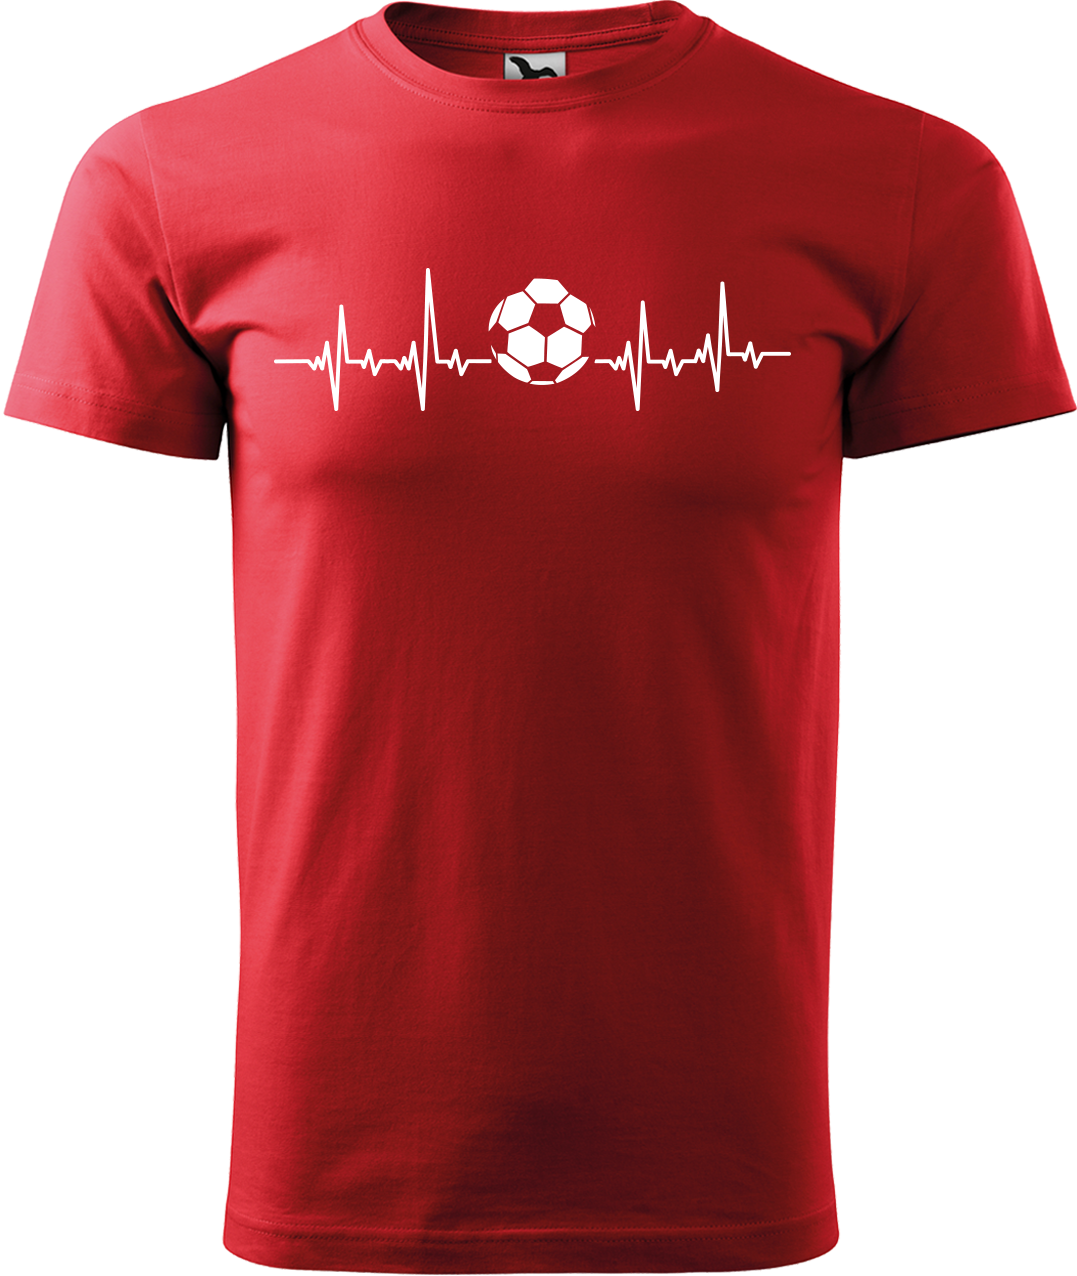 Tričko pro fotbalistu - Fotbalistův kardiogram Velikost: M, Barva: Červená (07)